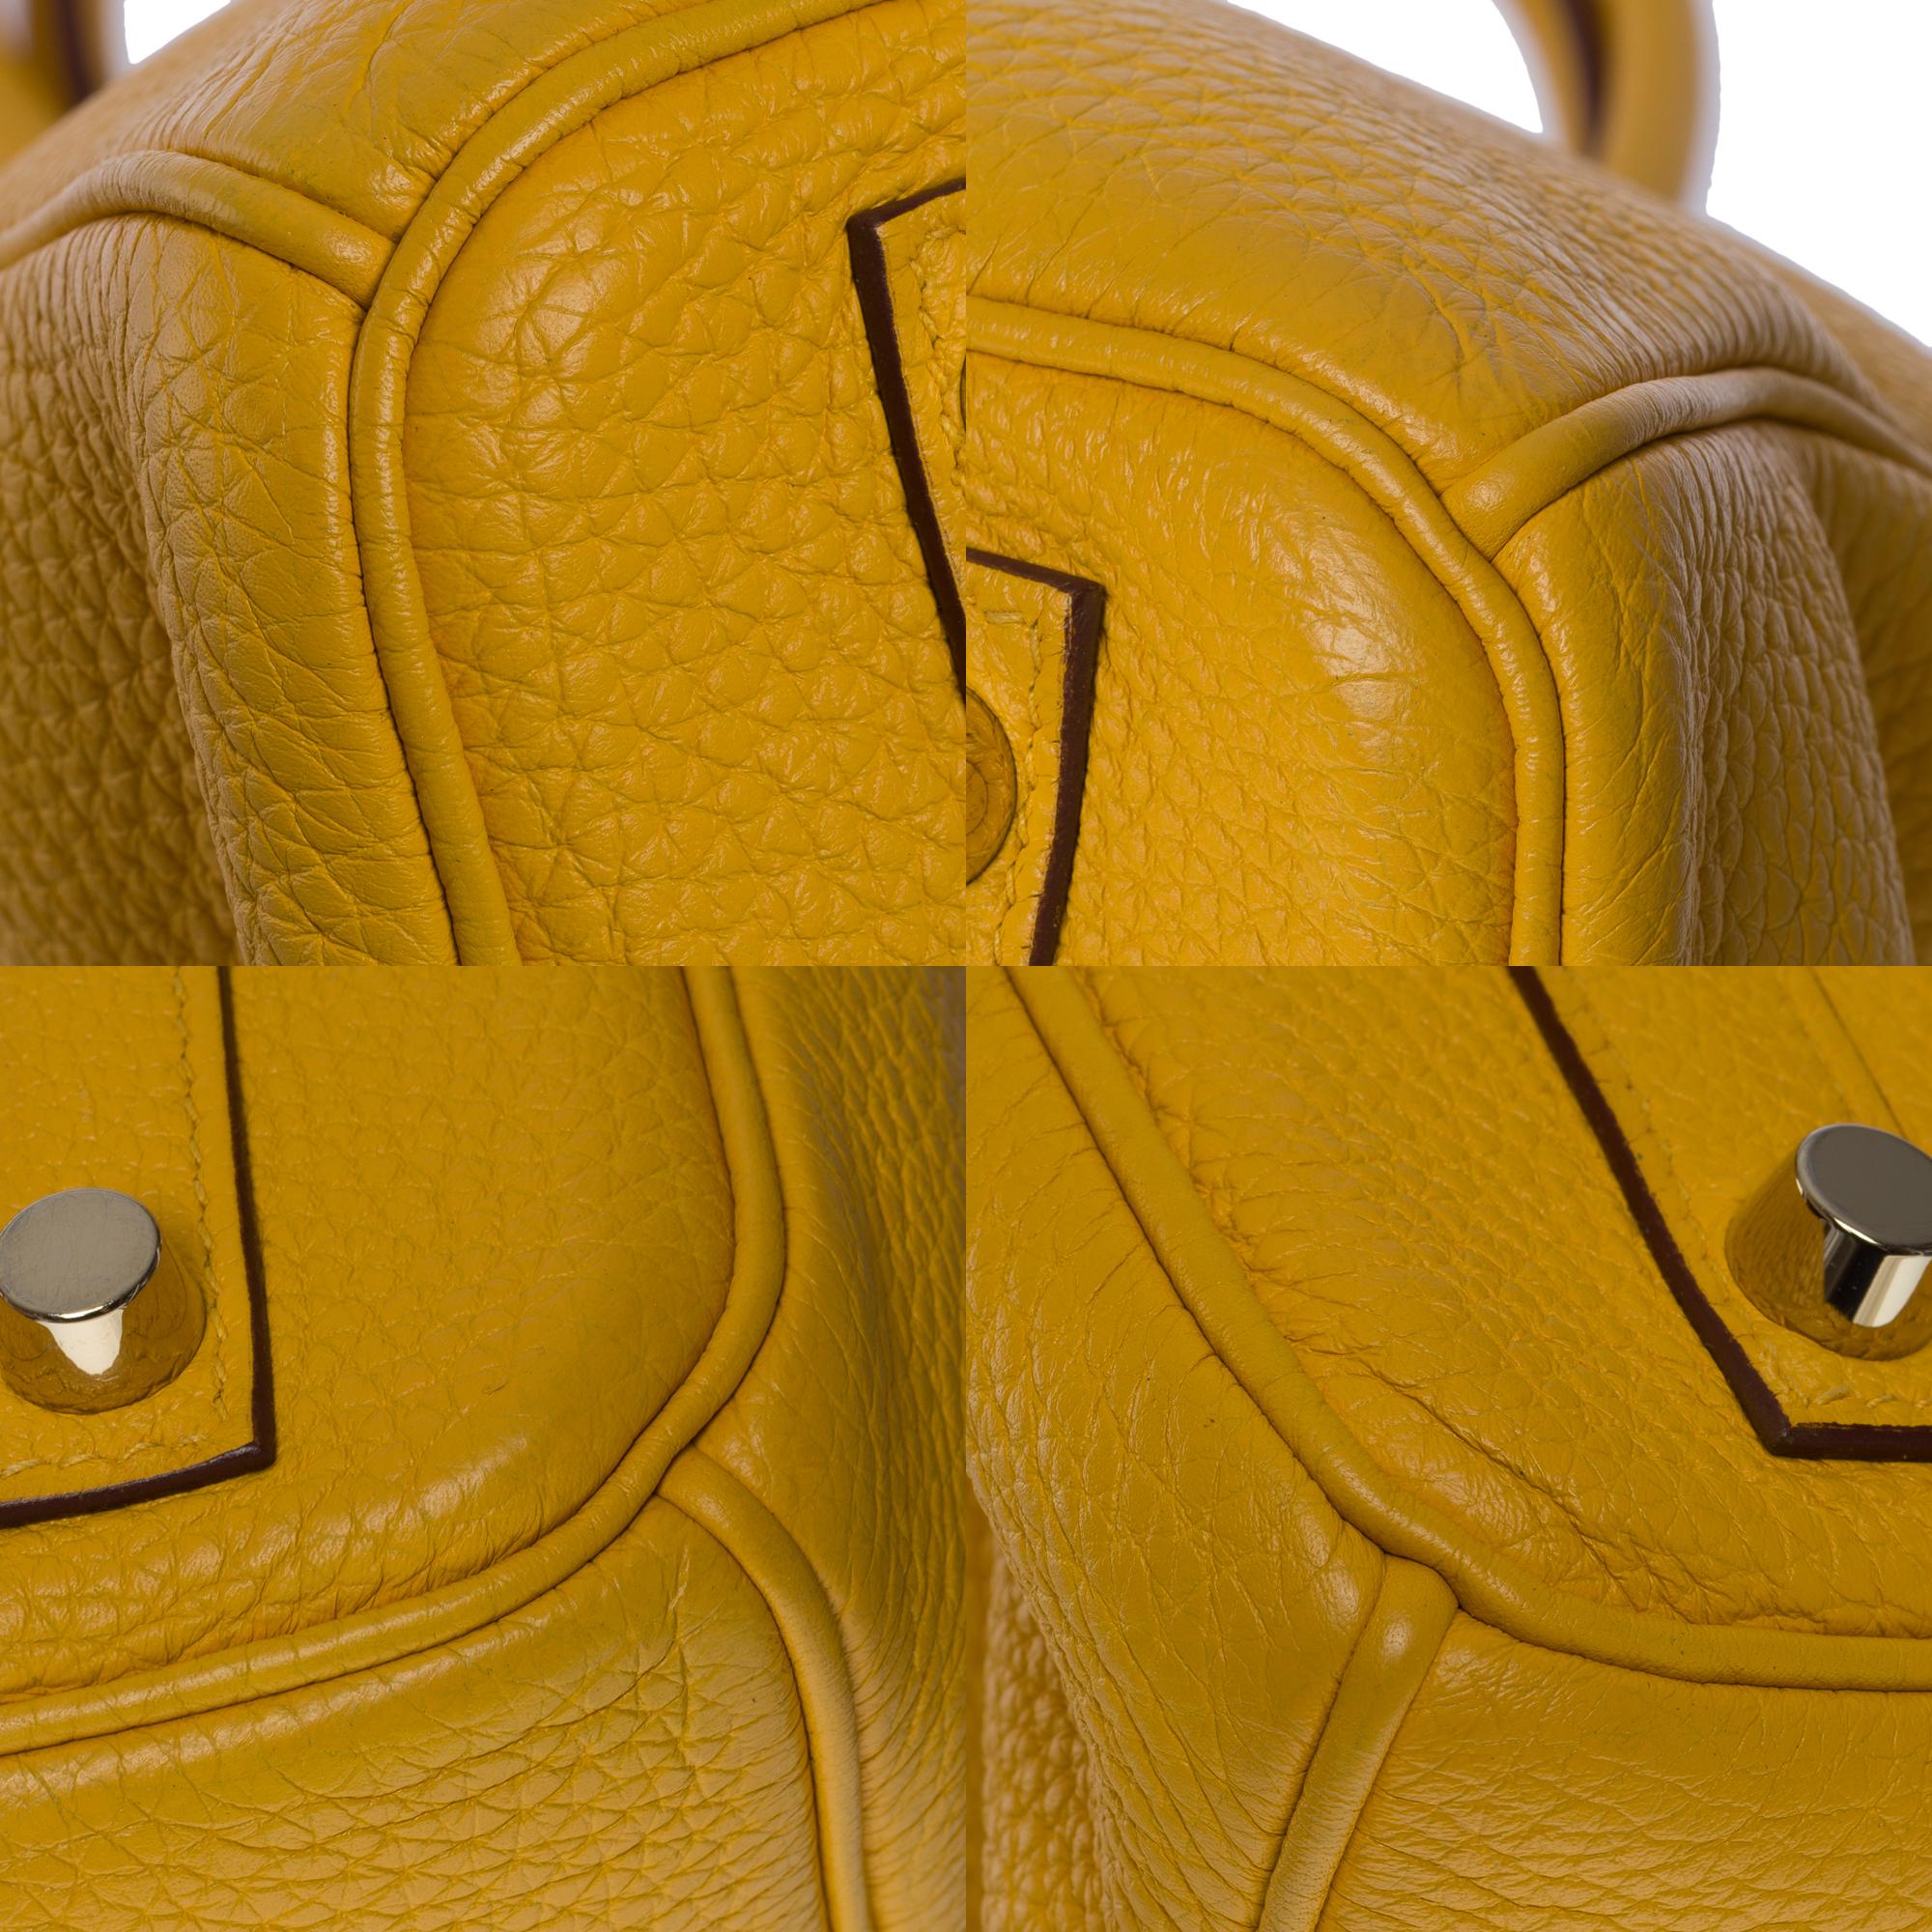 Amazing & Bright Hermès Birkin 30 handbag in Yellow Togo leather, GHW For Sale 7